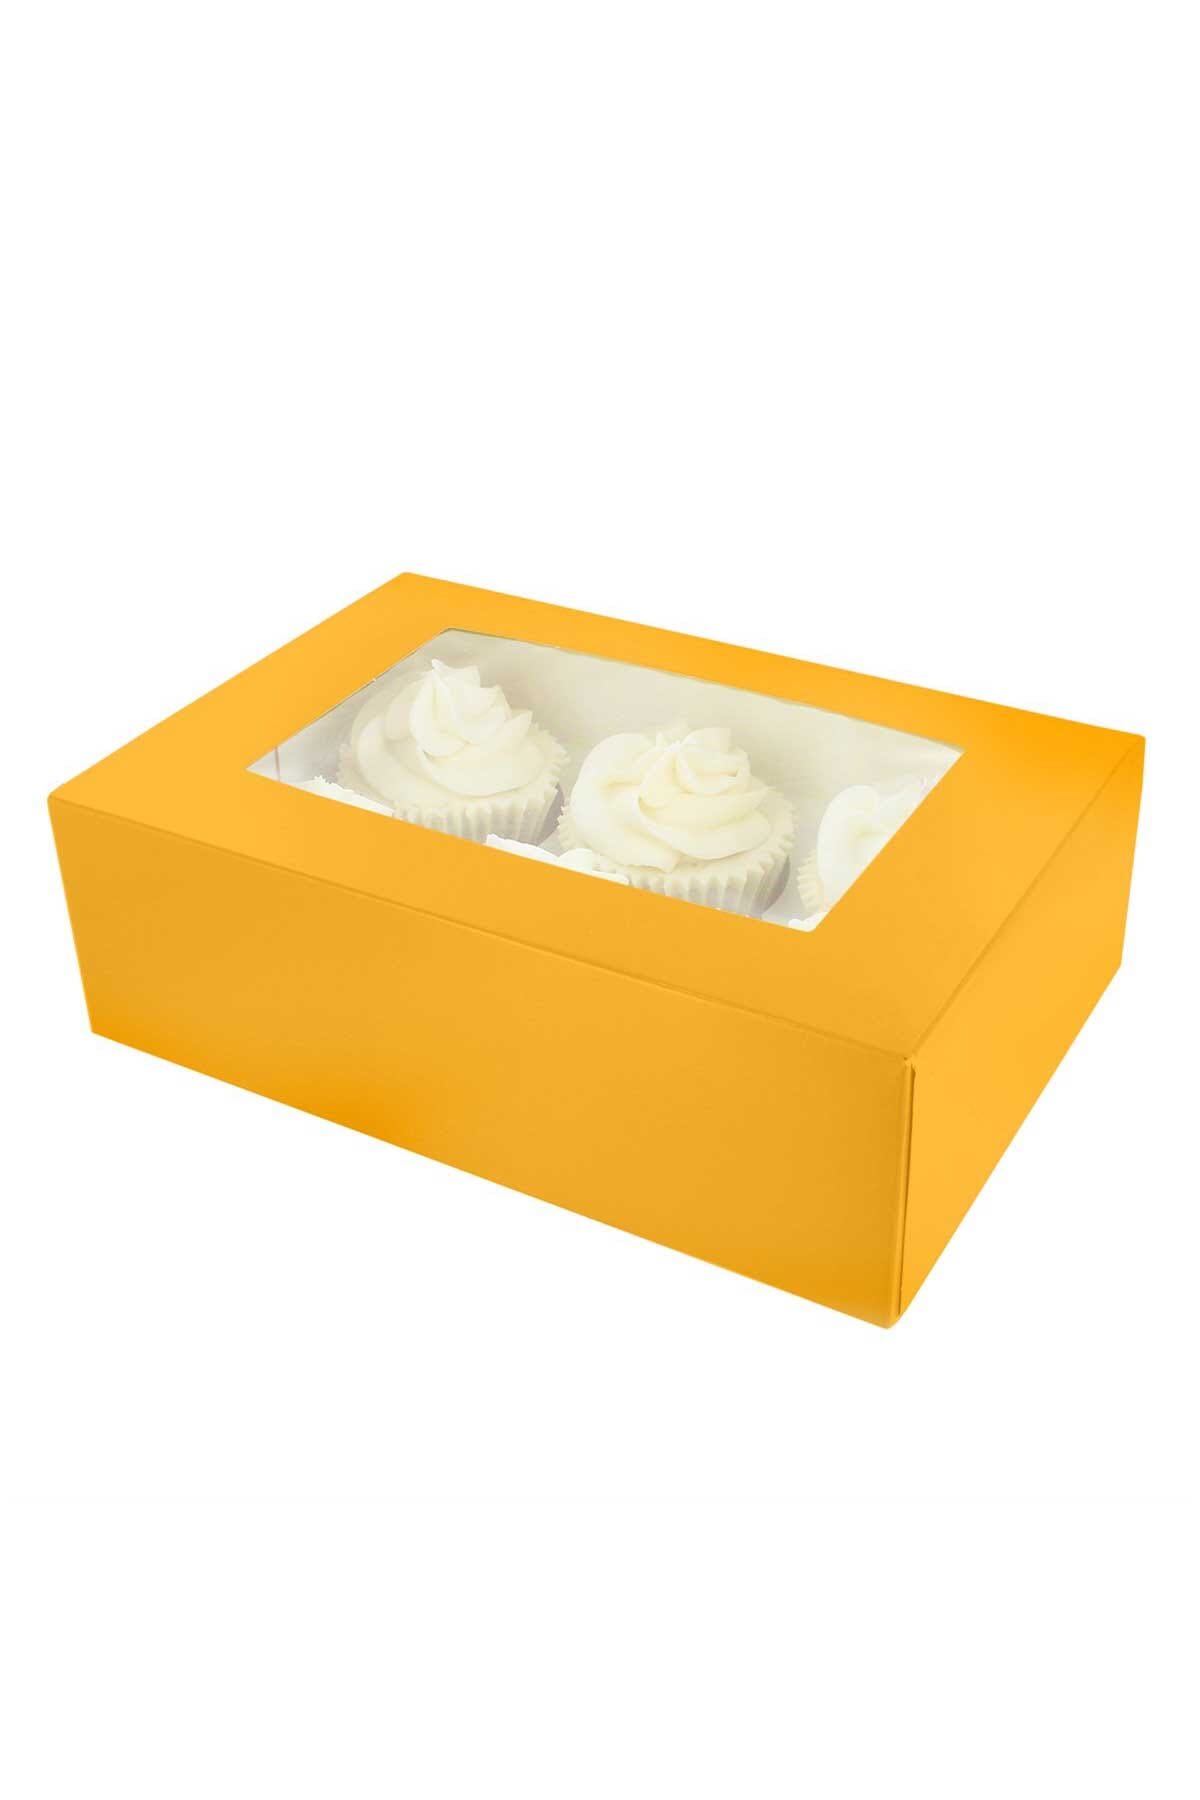 6 Hole Cupcake Box - Sunflower Yellow Cake Box Sprinkly 